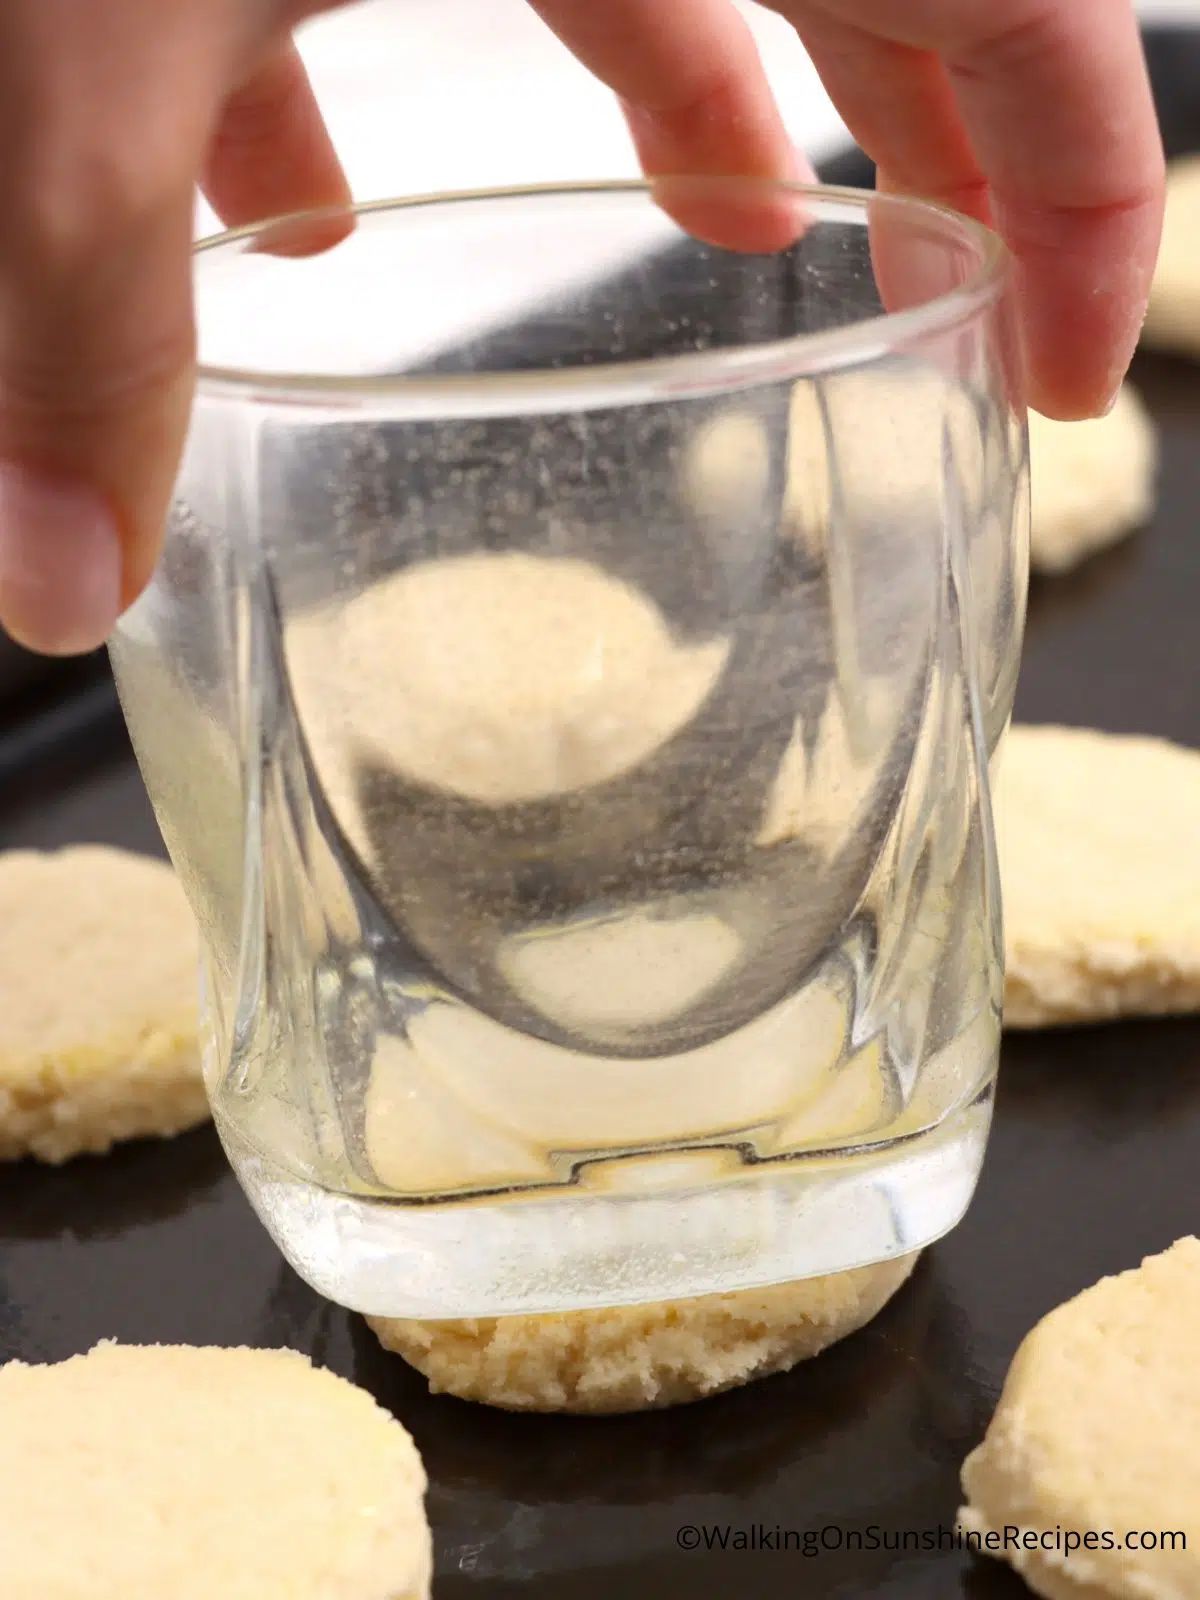 press sugar cookie dough balls flat using a glass.